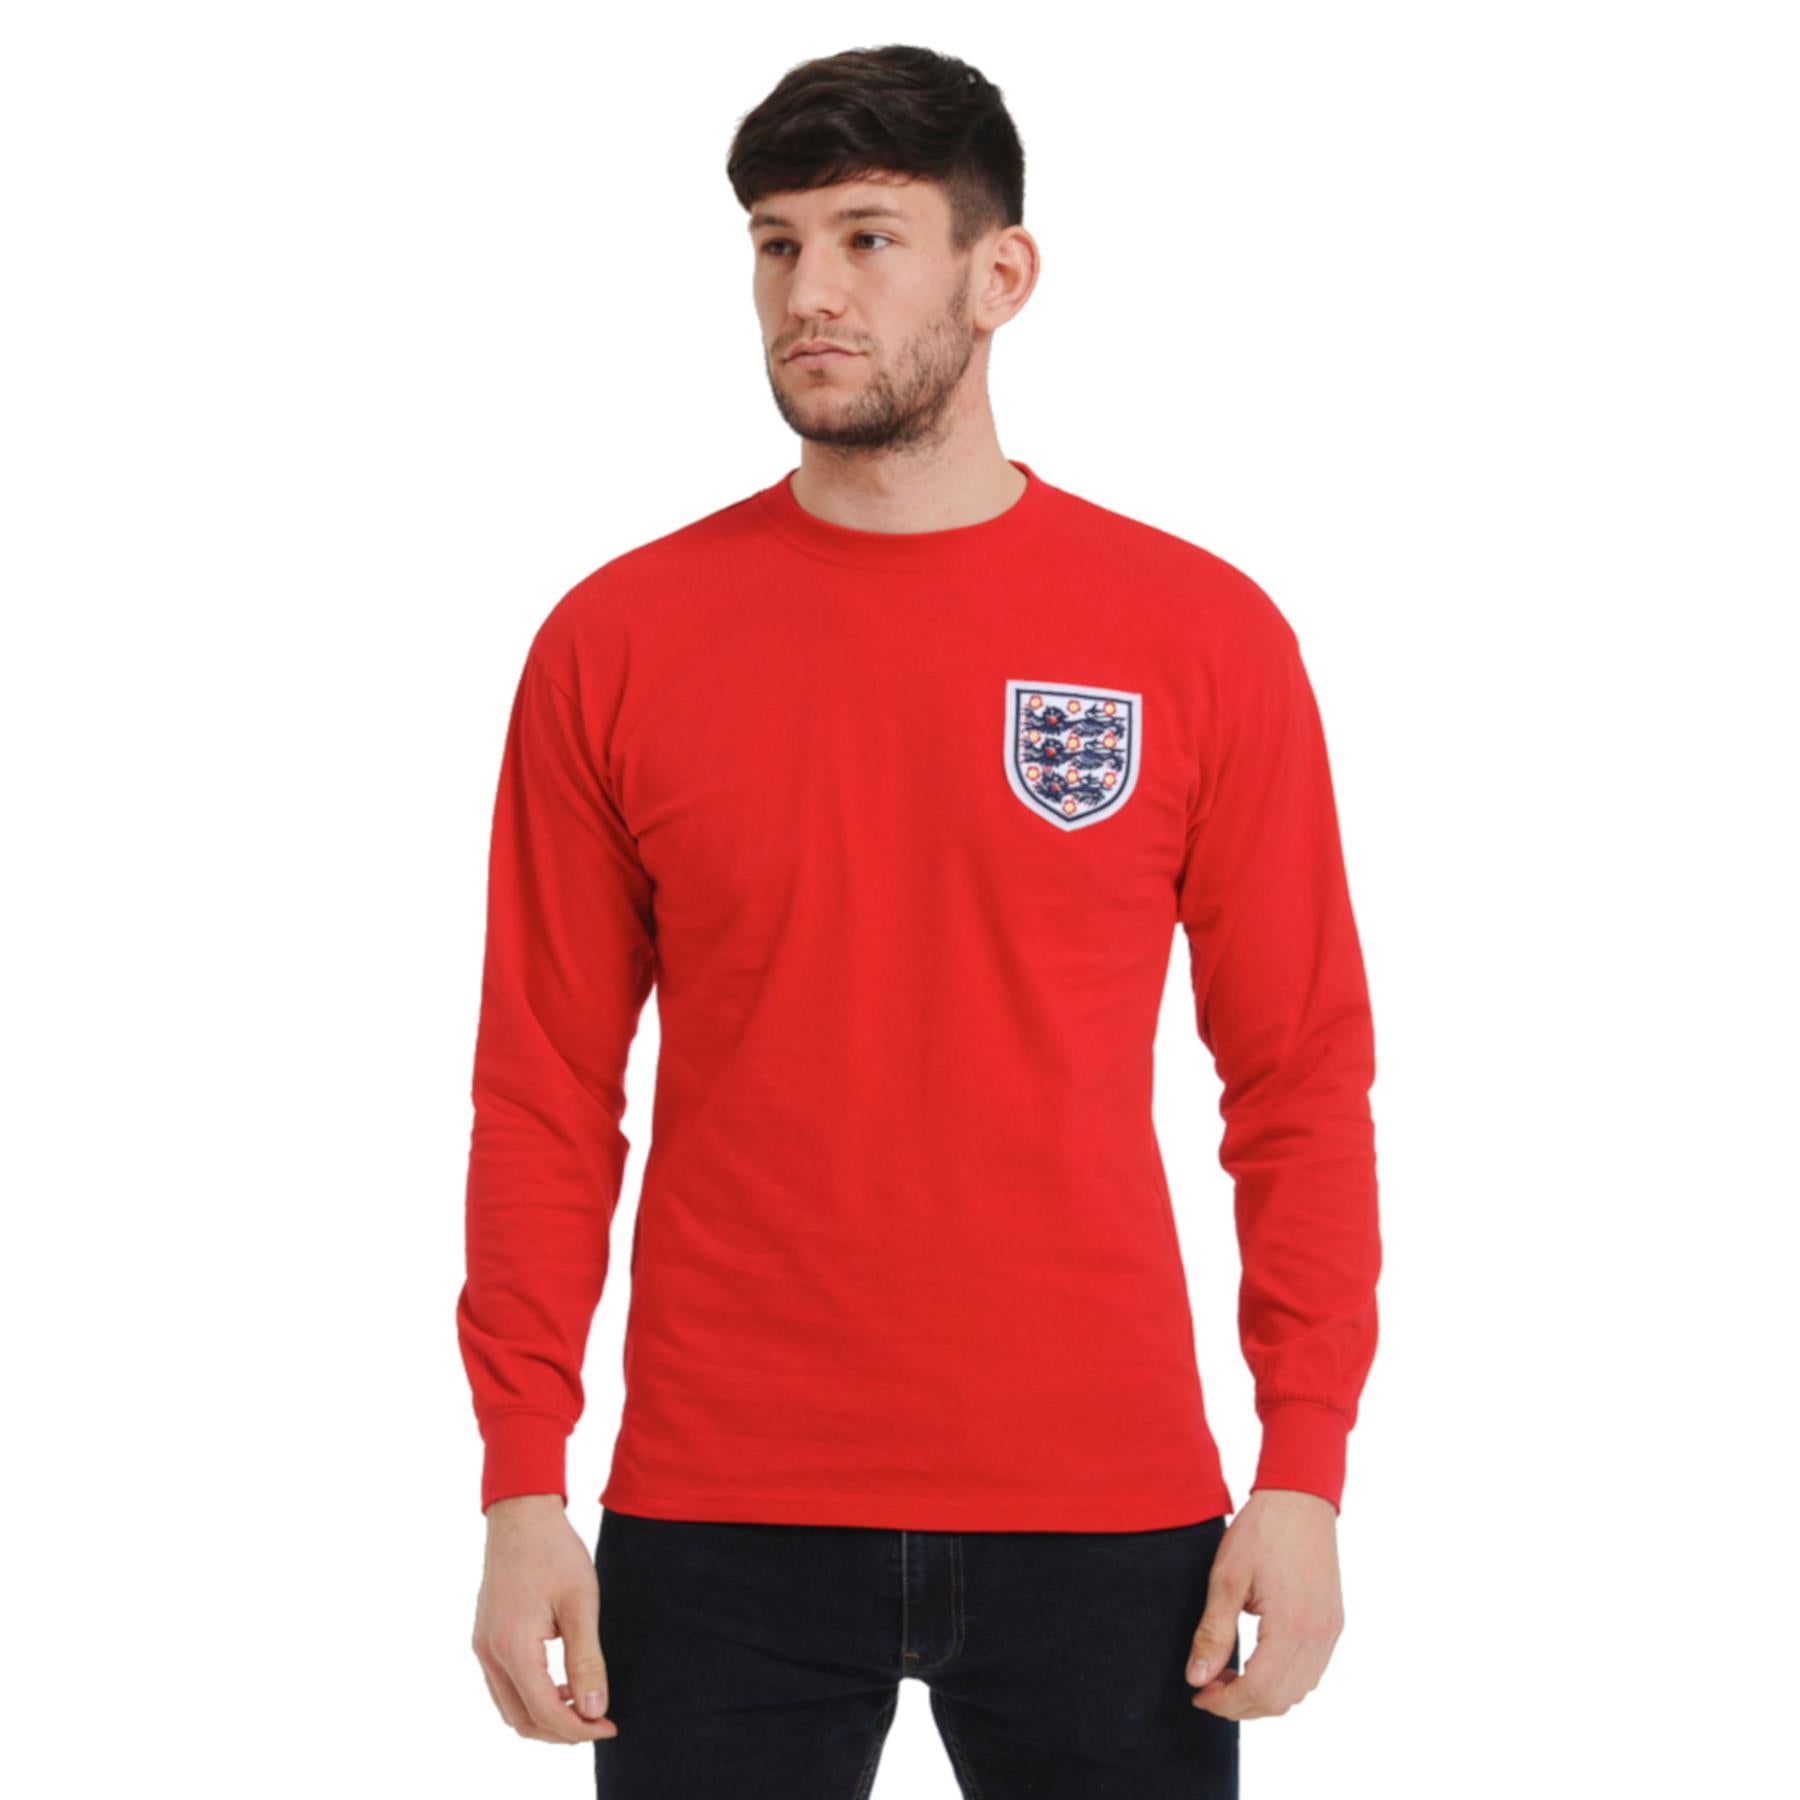 england 1966 shirt